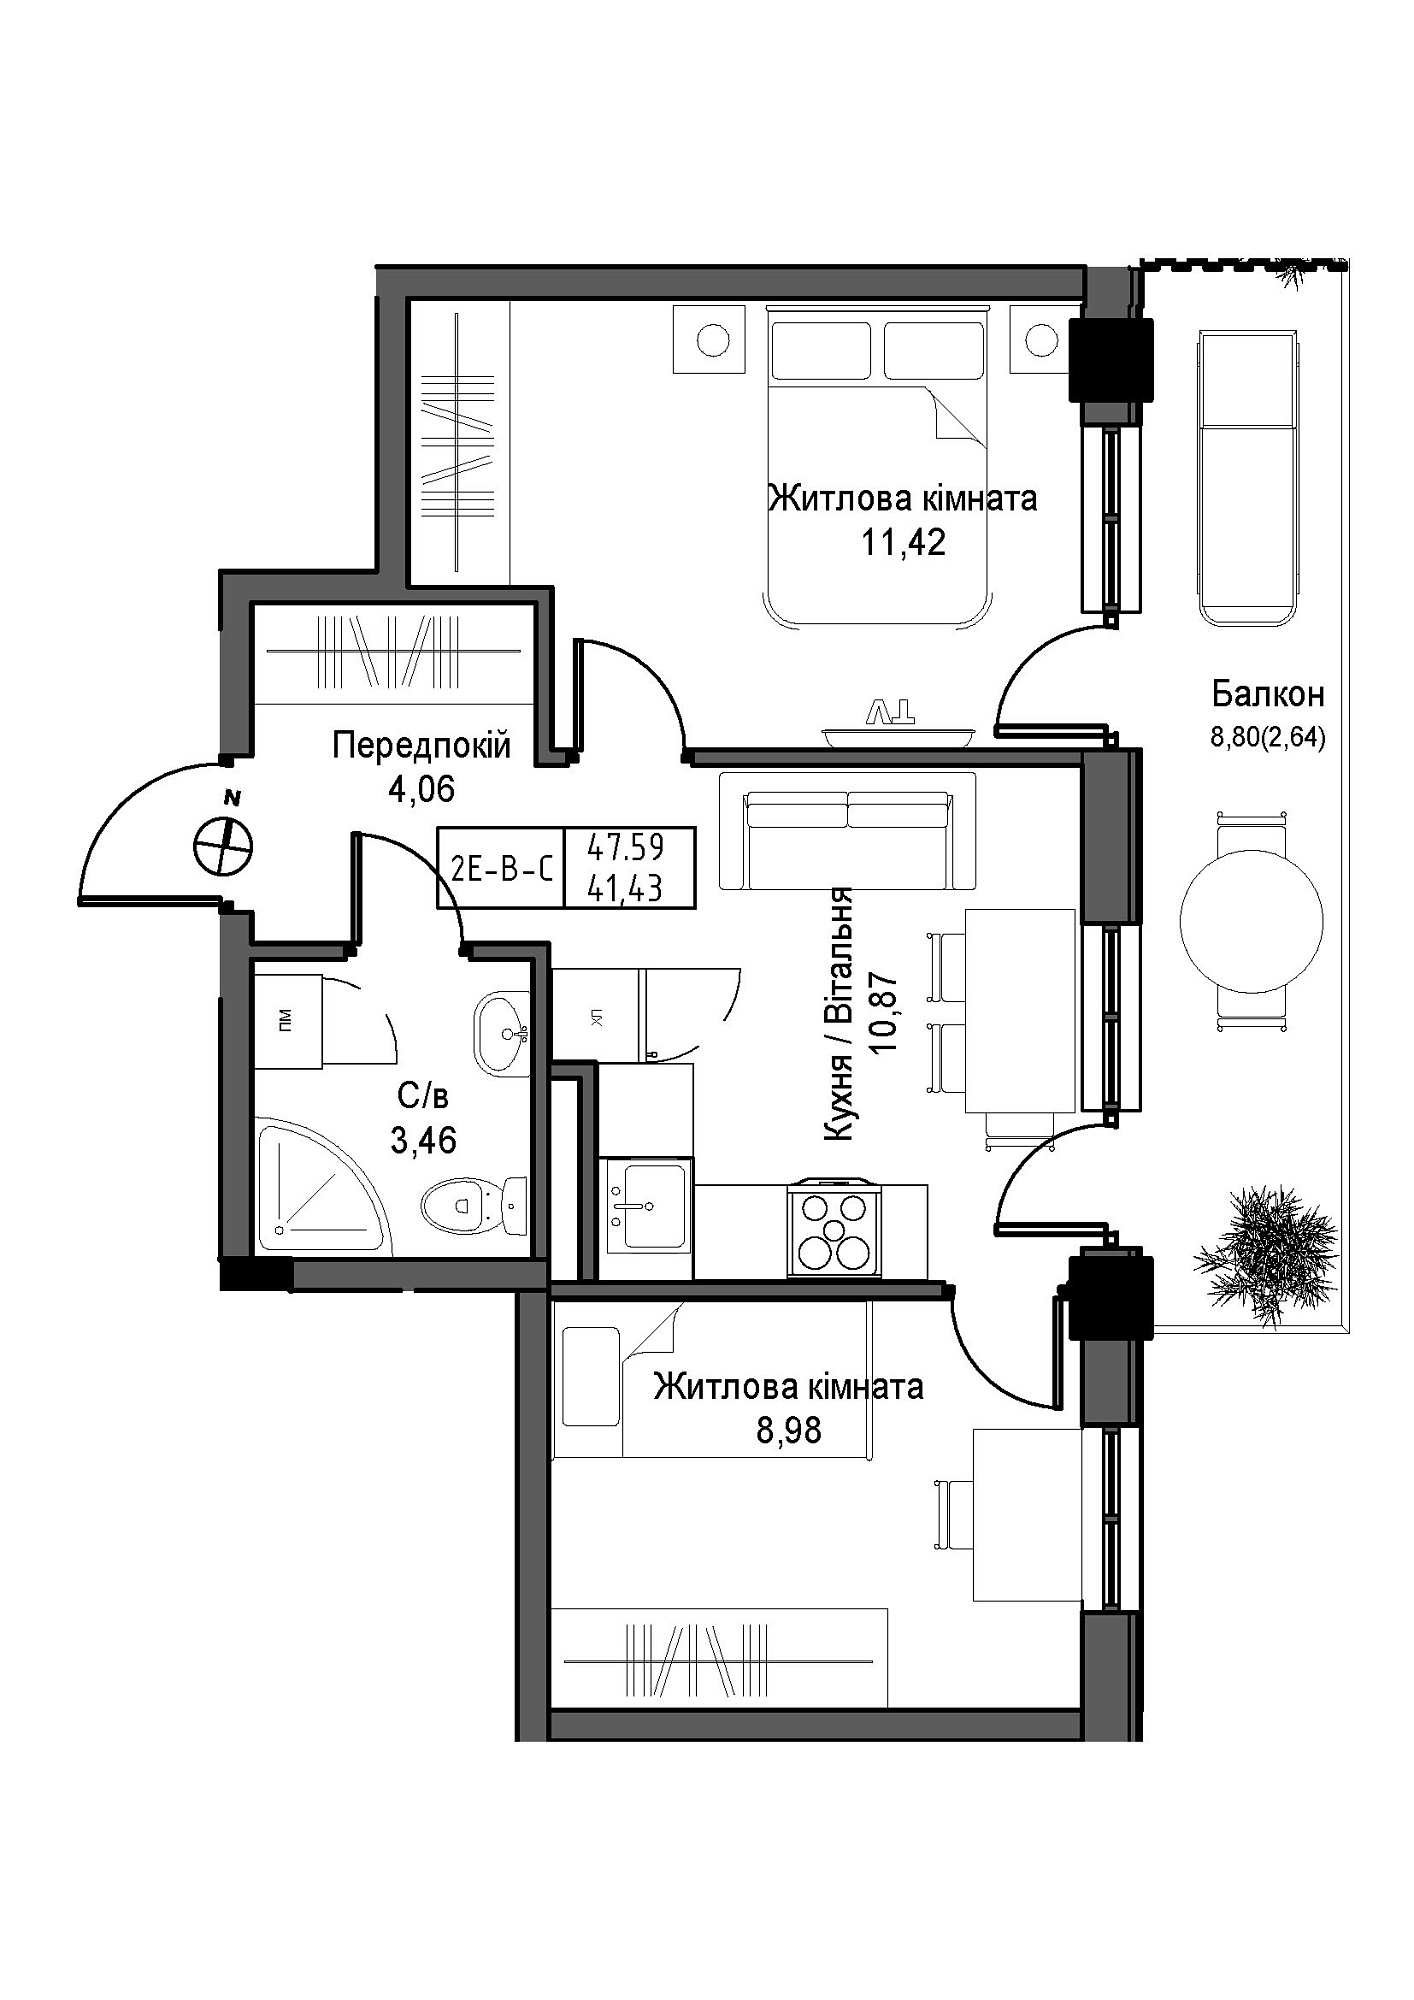 Planning 2-rm flats area 41.43m2, UM-007-12/0007.